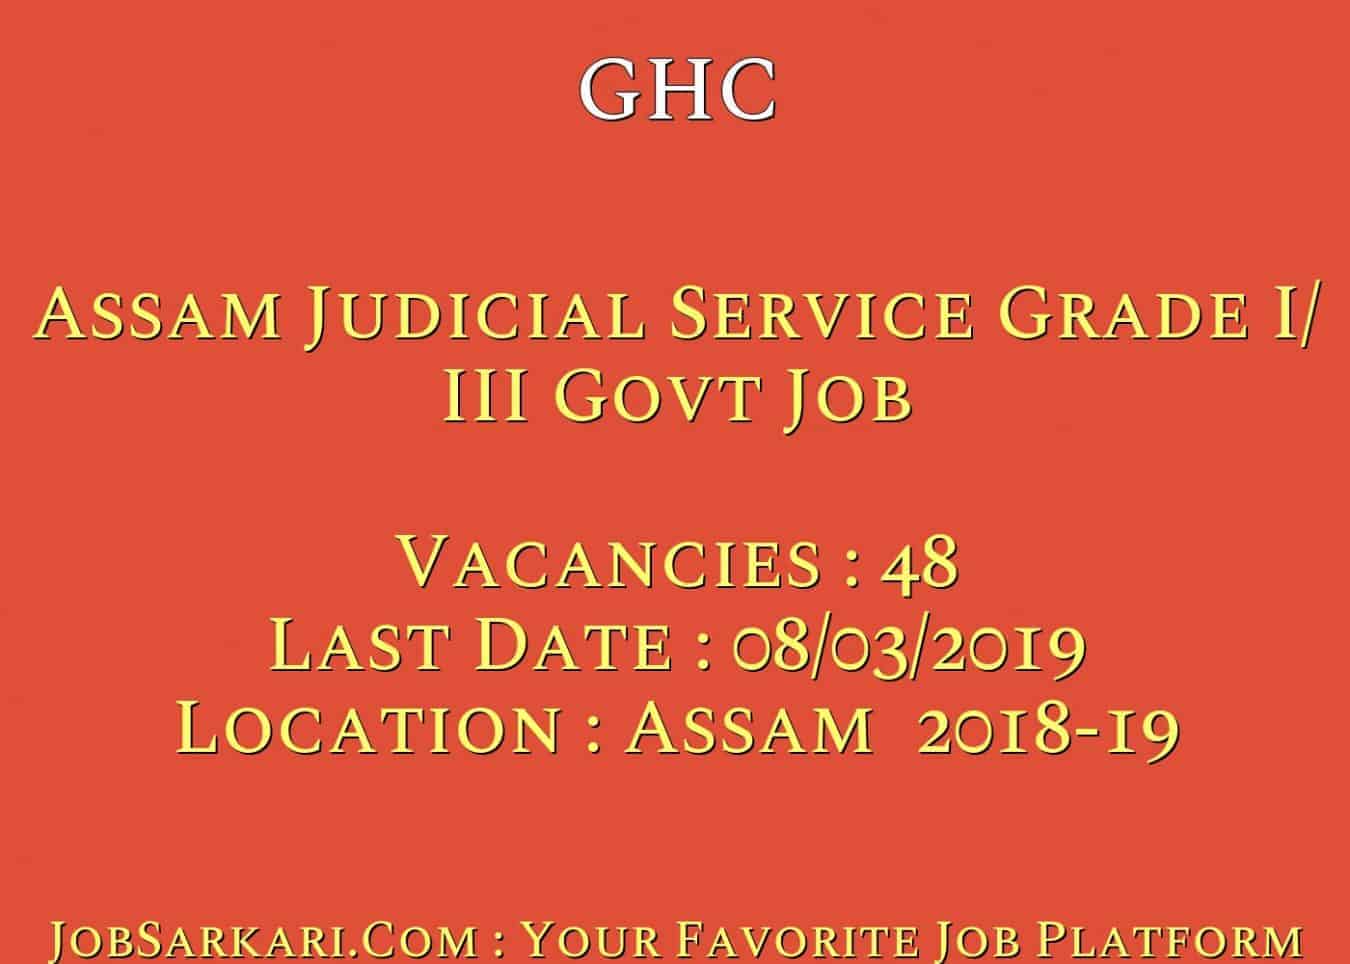 GHC Recruitment 2019 For Assam Judicial Service Grade I/ III Govt Job